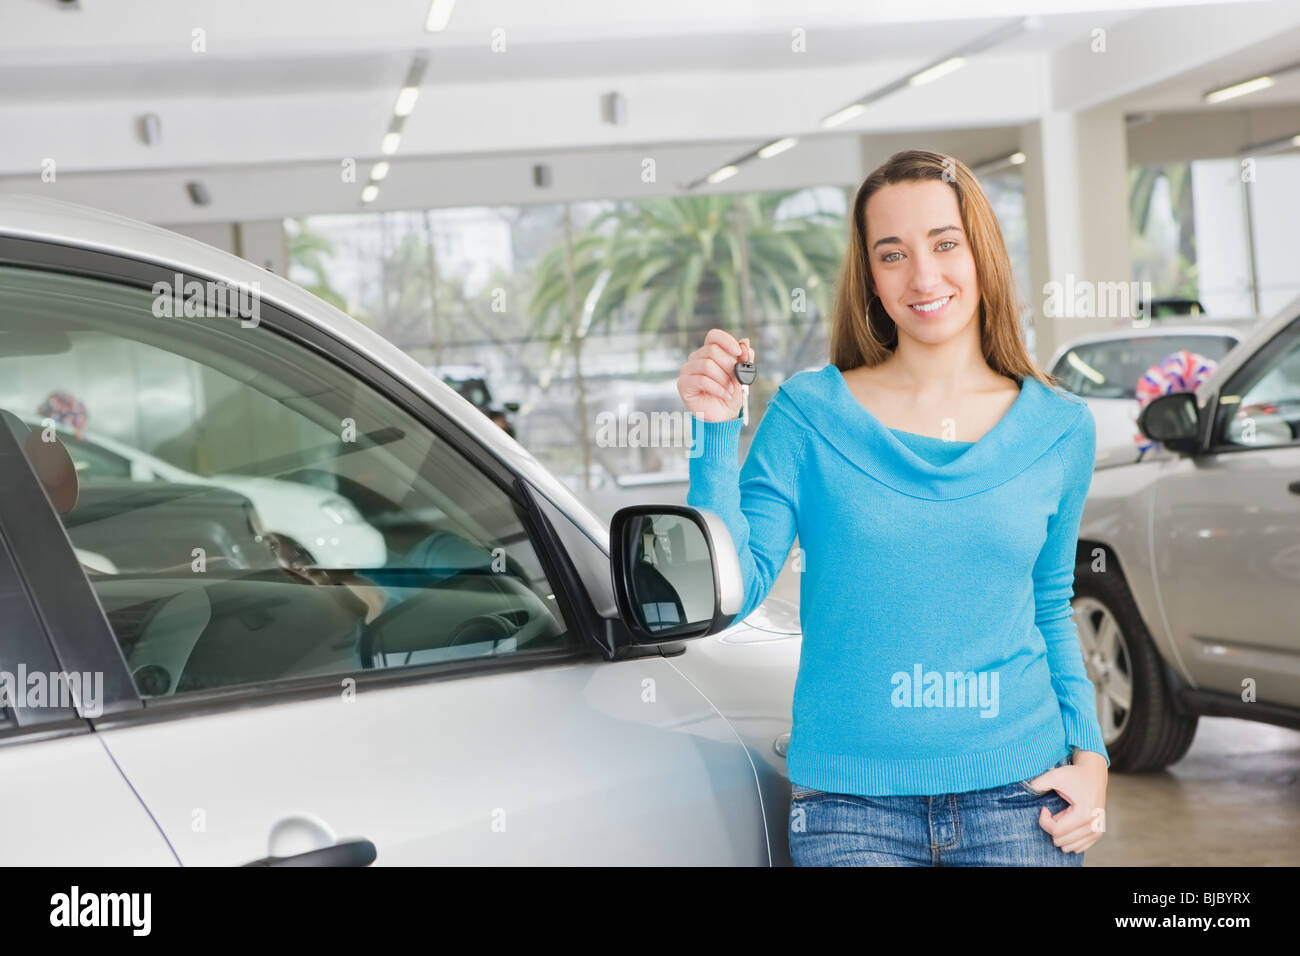 Hispanic woman holding keys to new car Stock Photo